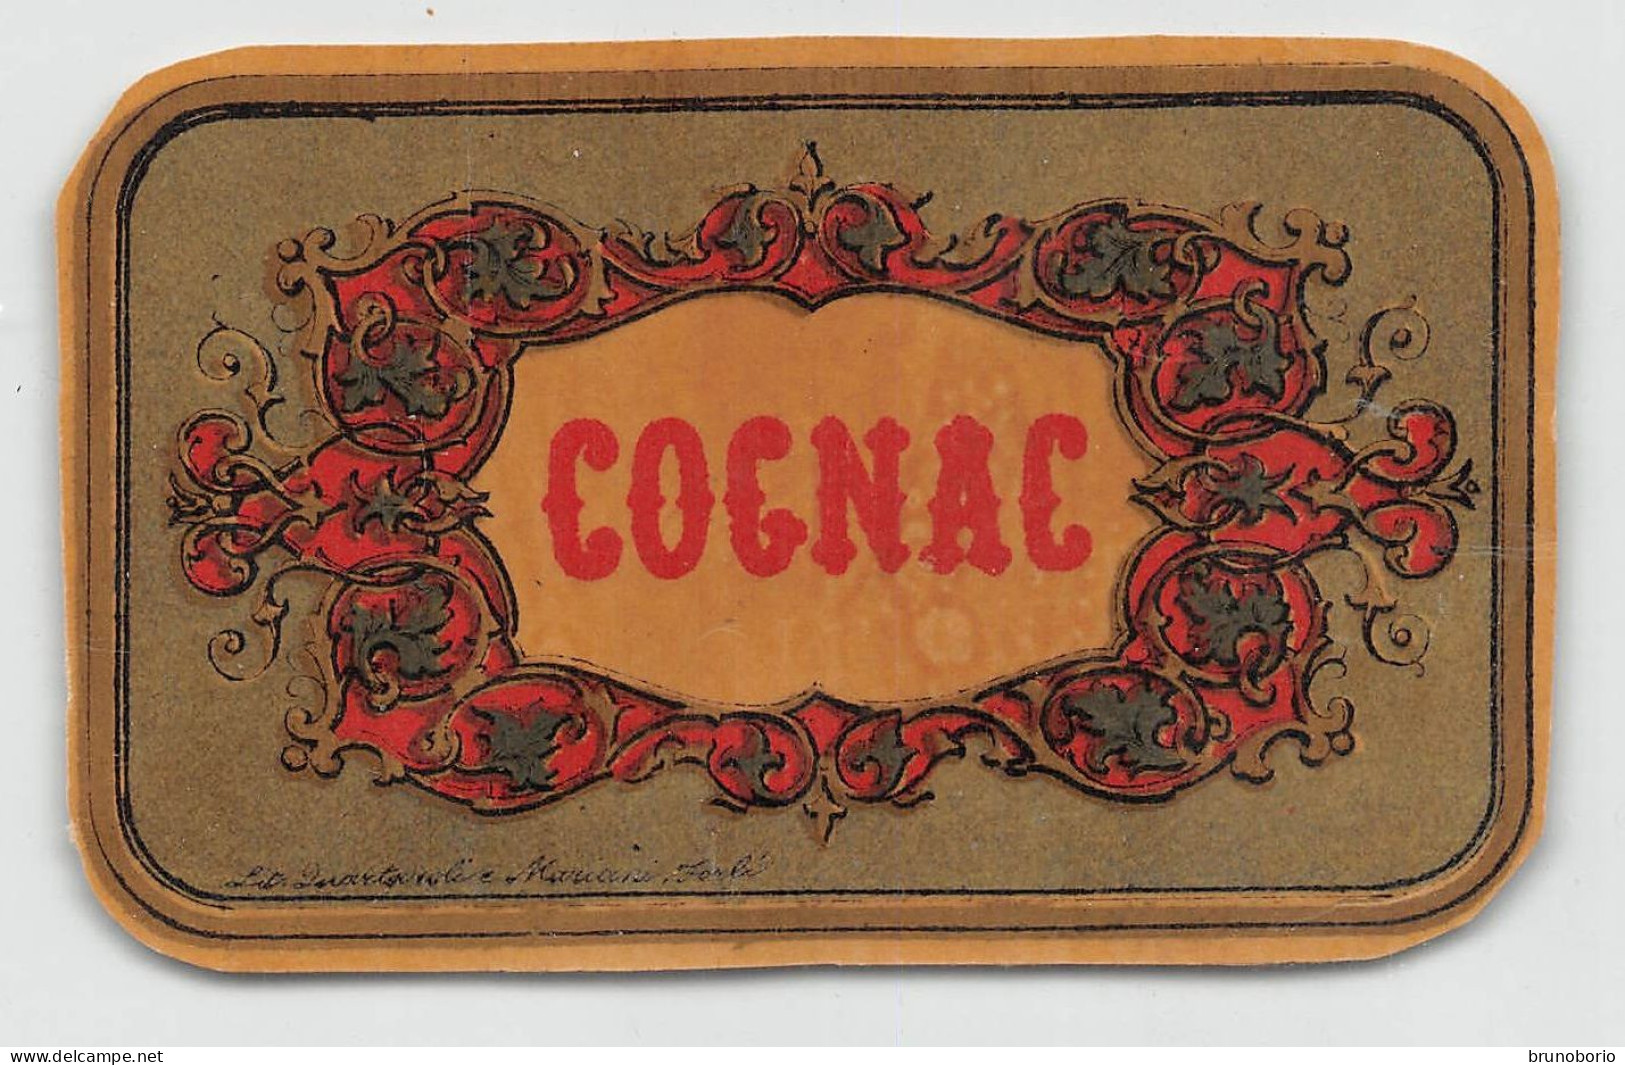 00102 "COGNAC" CROMOLITO - ETICHETTA FRANCESE  FINE XIX SECOLO - Alkohole & Spirituosen